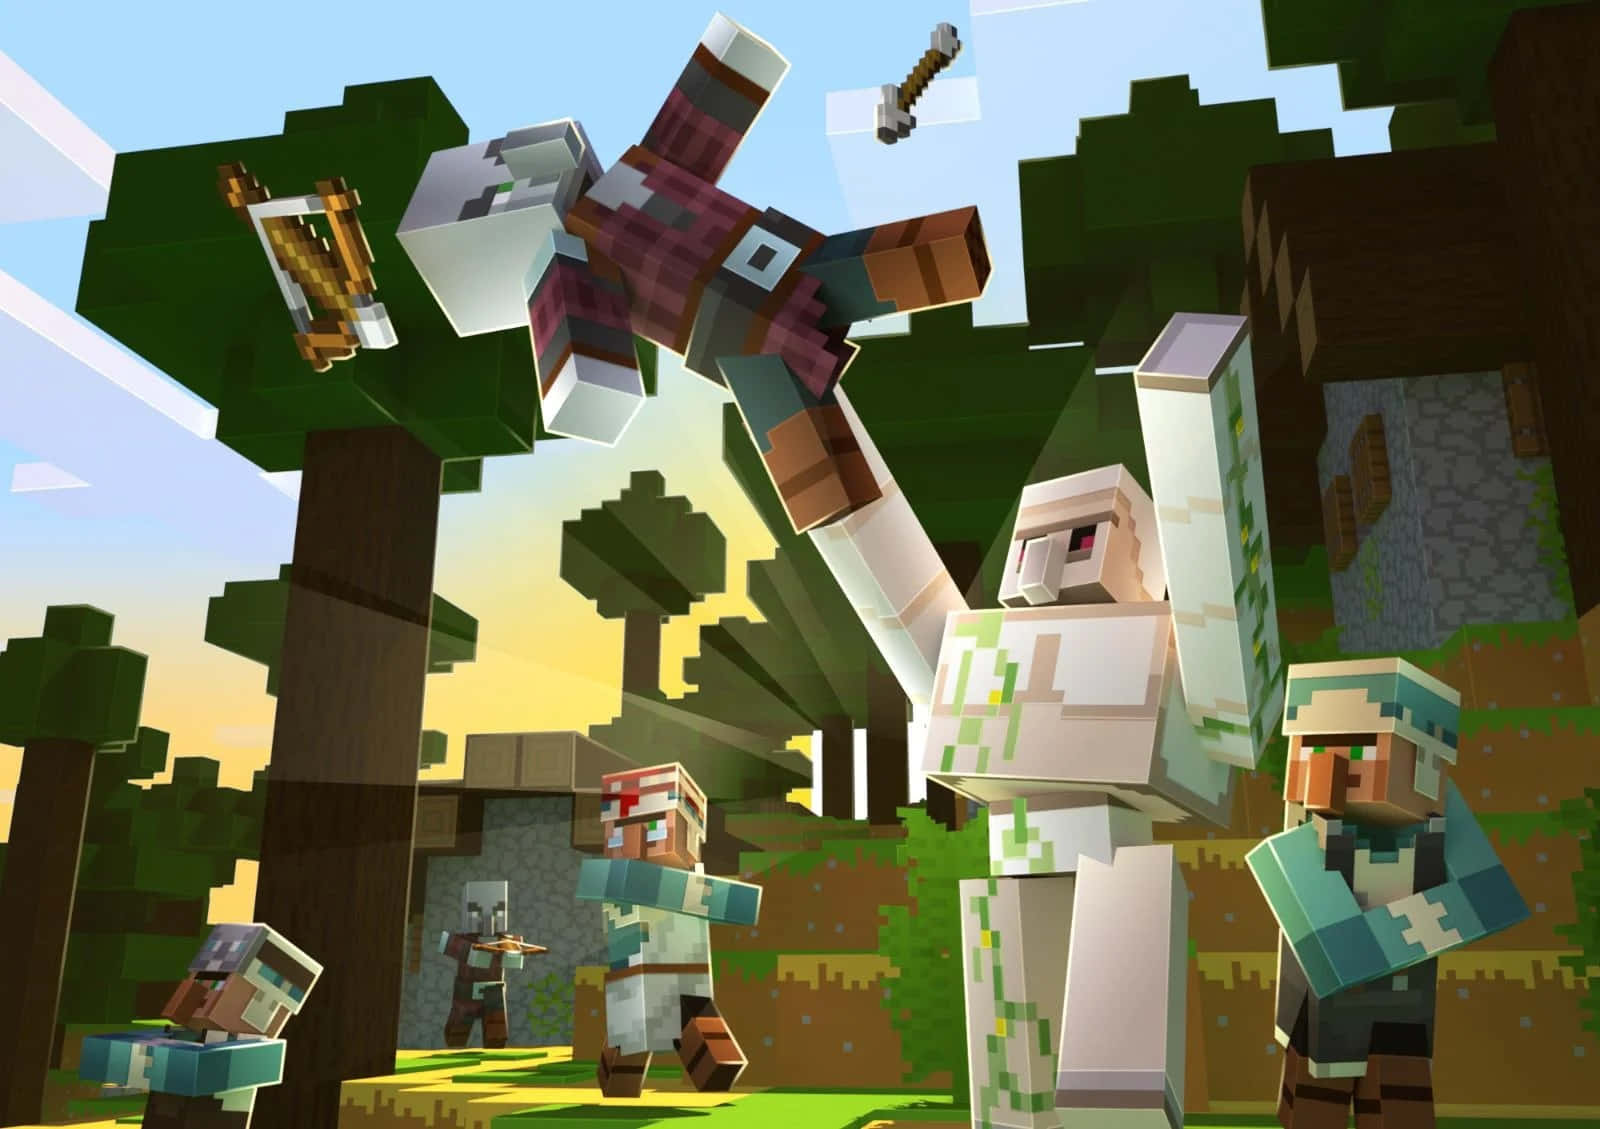 Caption: A Majestic Minecraft Iron Golem Guarding the Village Wallpaper